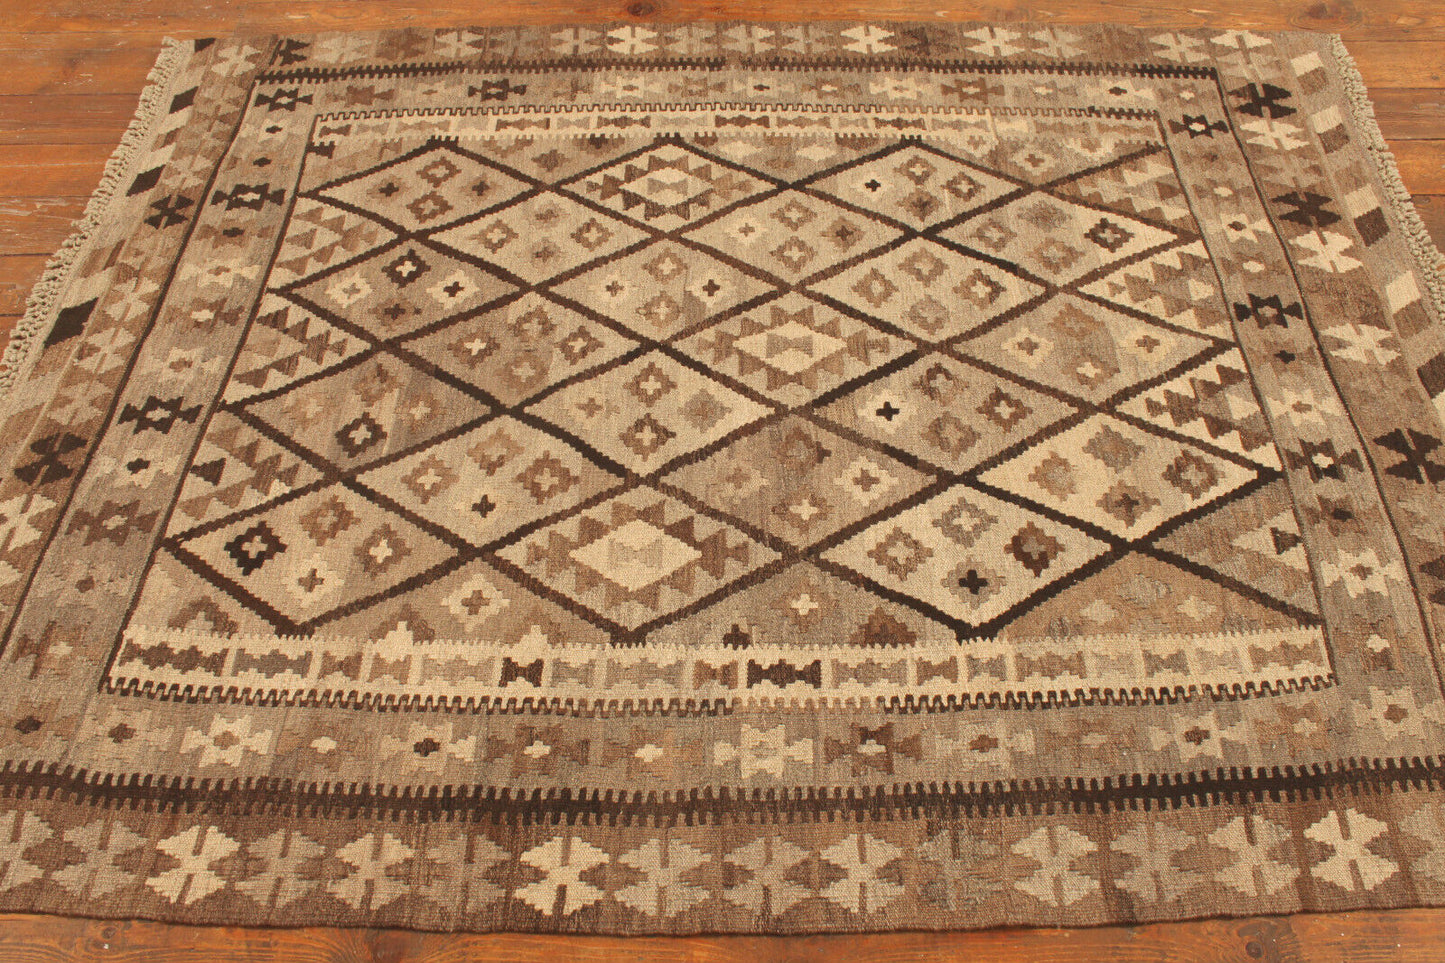 Detailed image 6: Front view of the Handmade Vintage Afghan Flatweave Kilim highlighting design elements